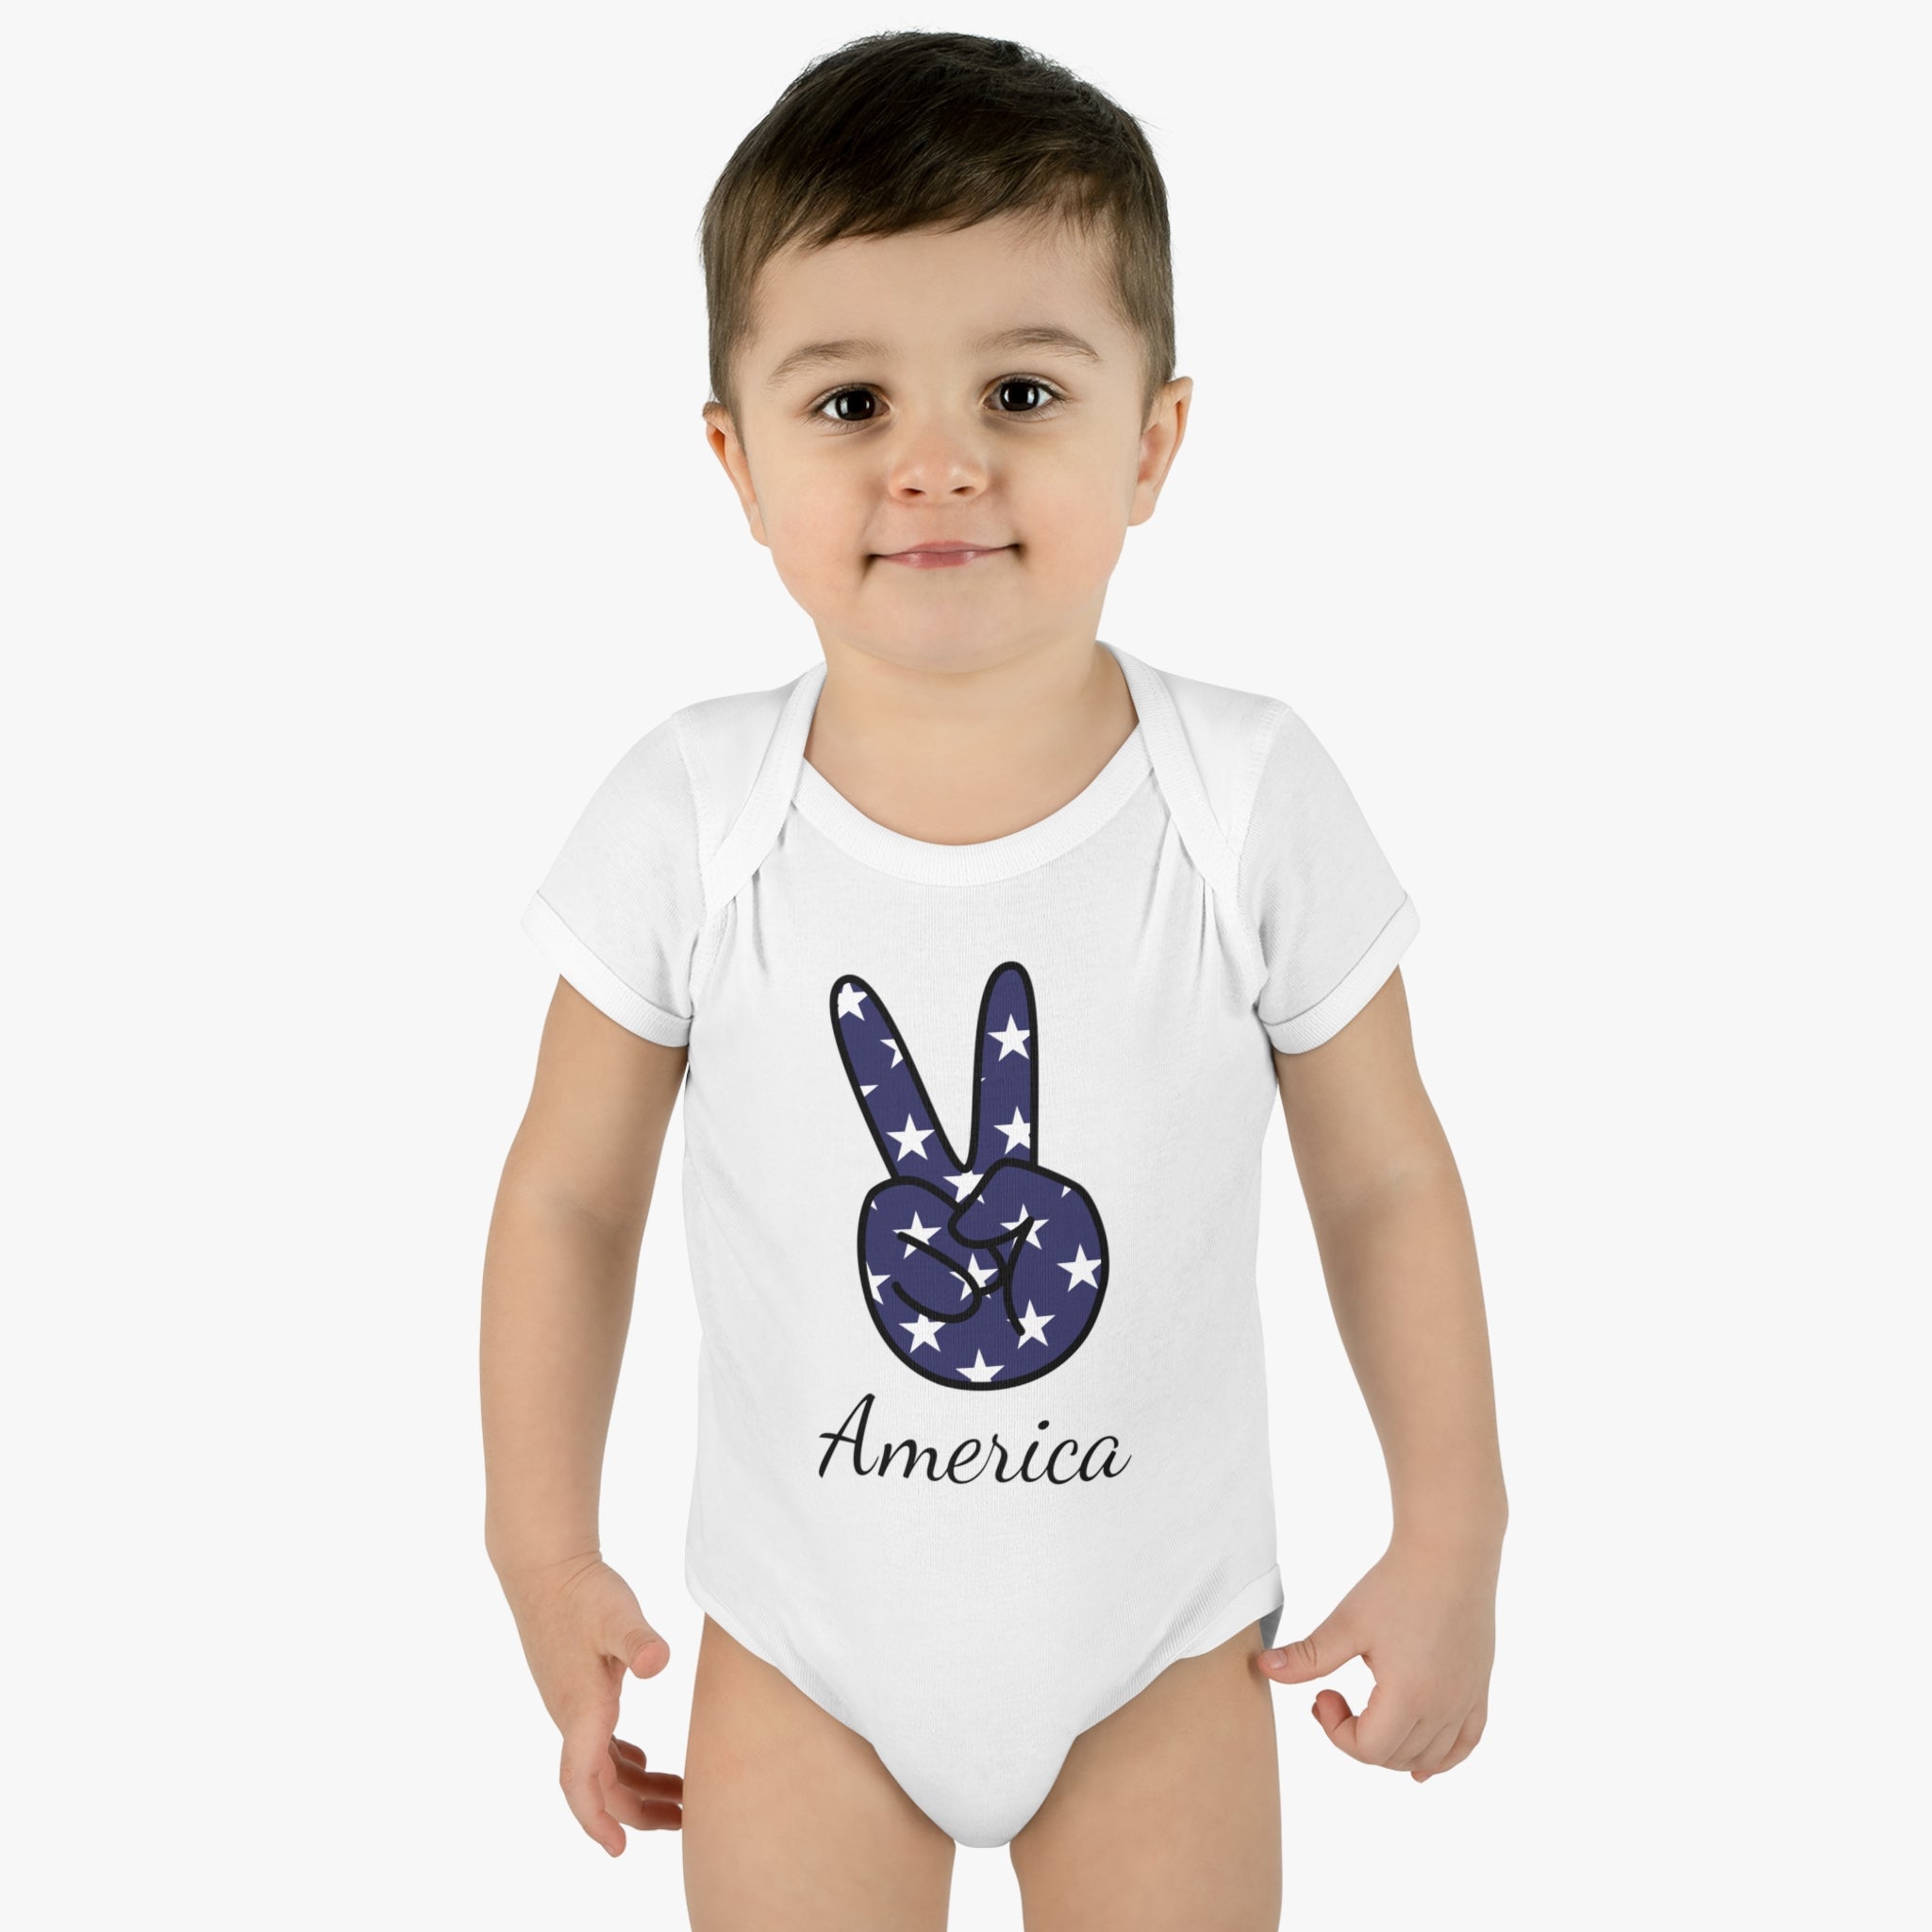 America Piece Sign Design Baby Bodysuit